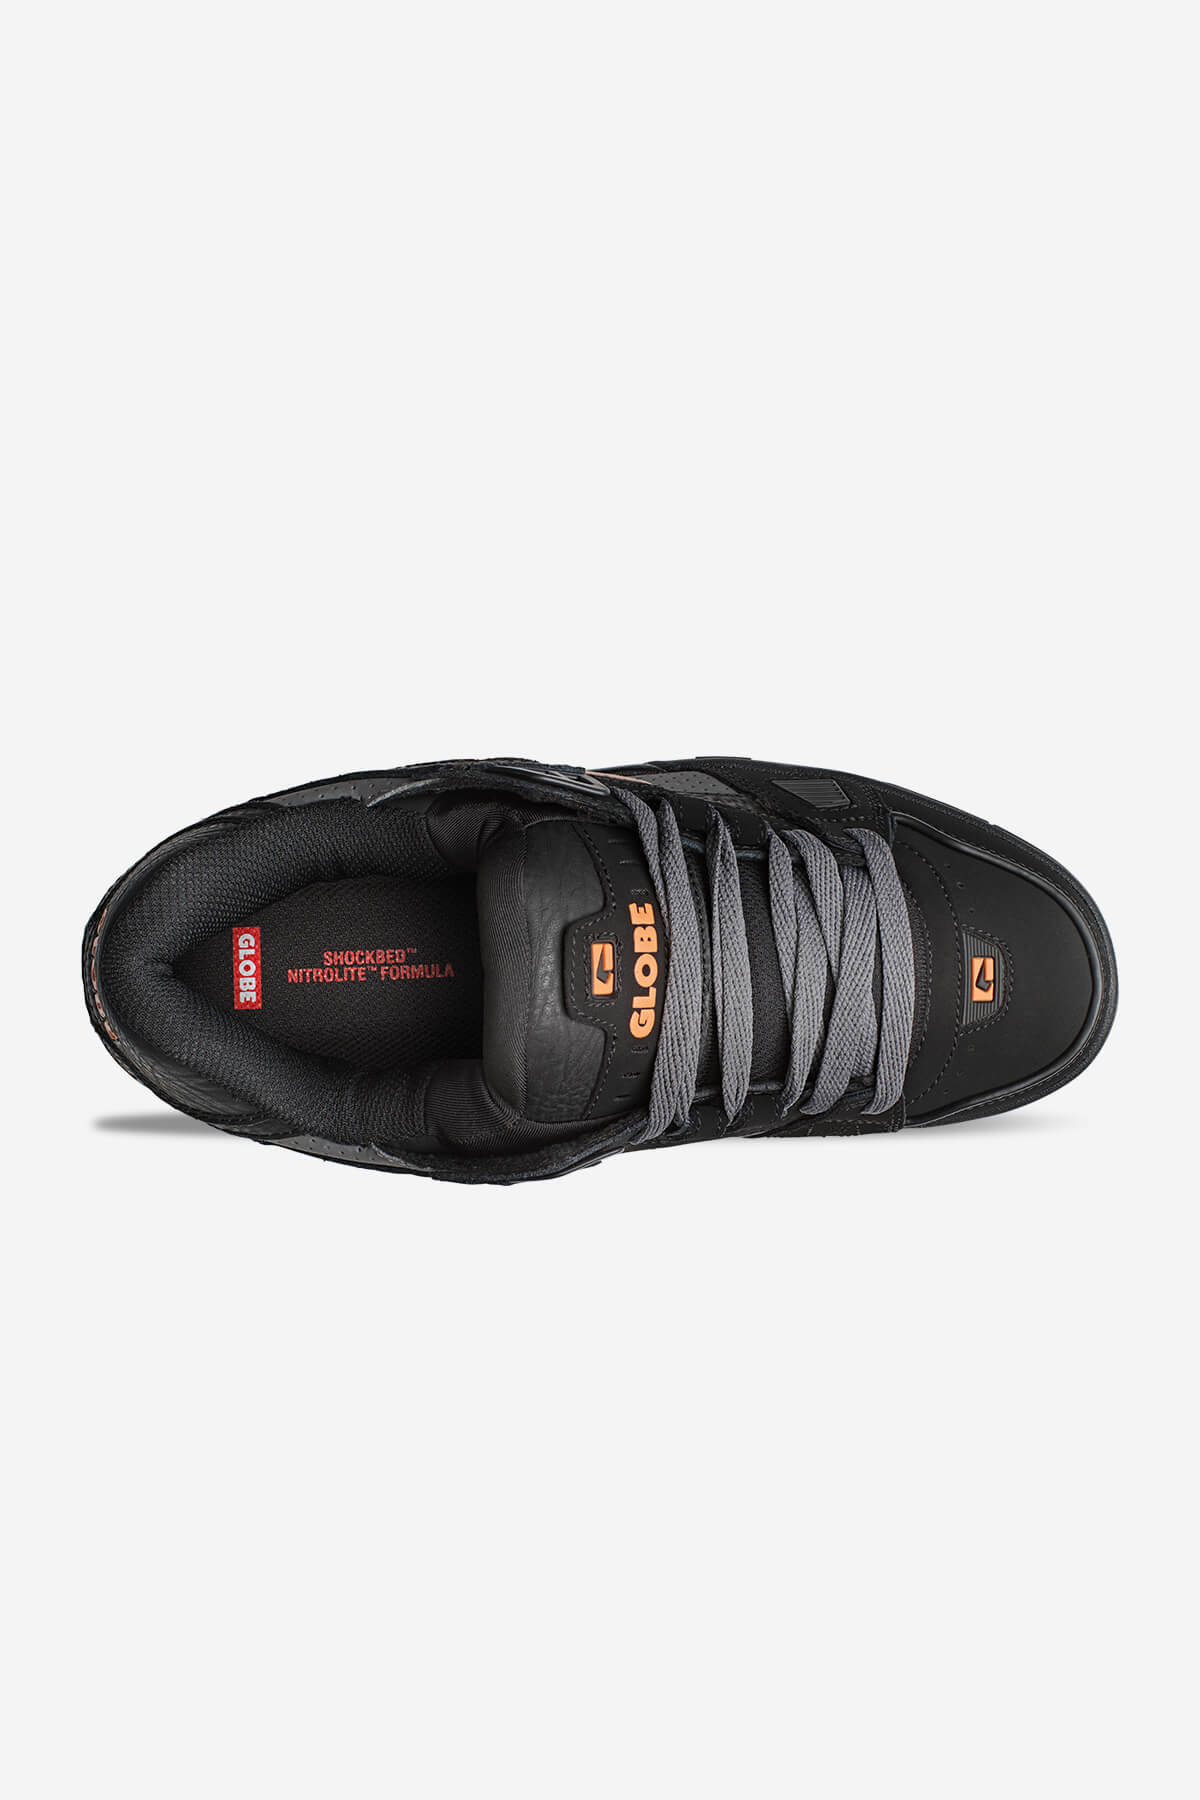 Globe Low shoes Sabre - Black/Orange in Black/Orange